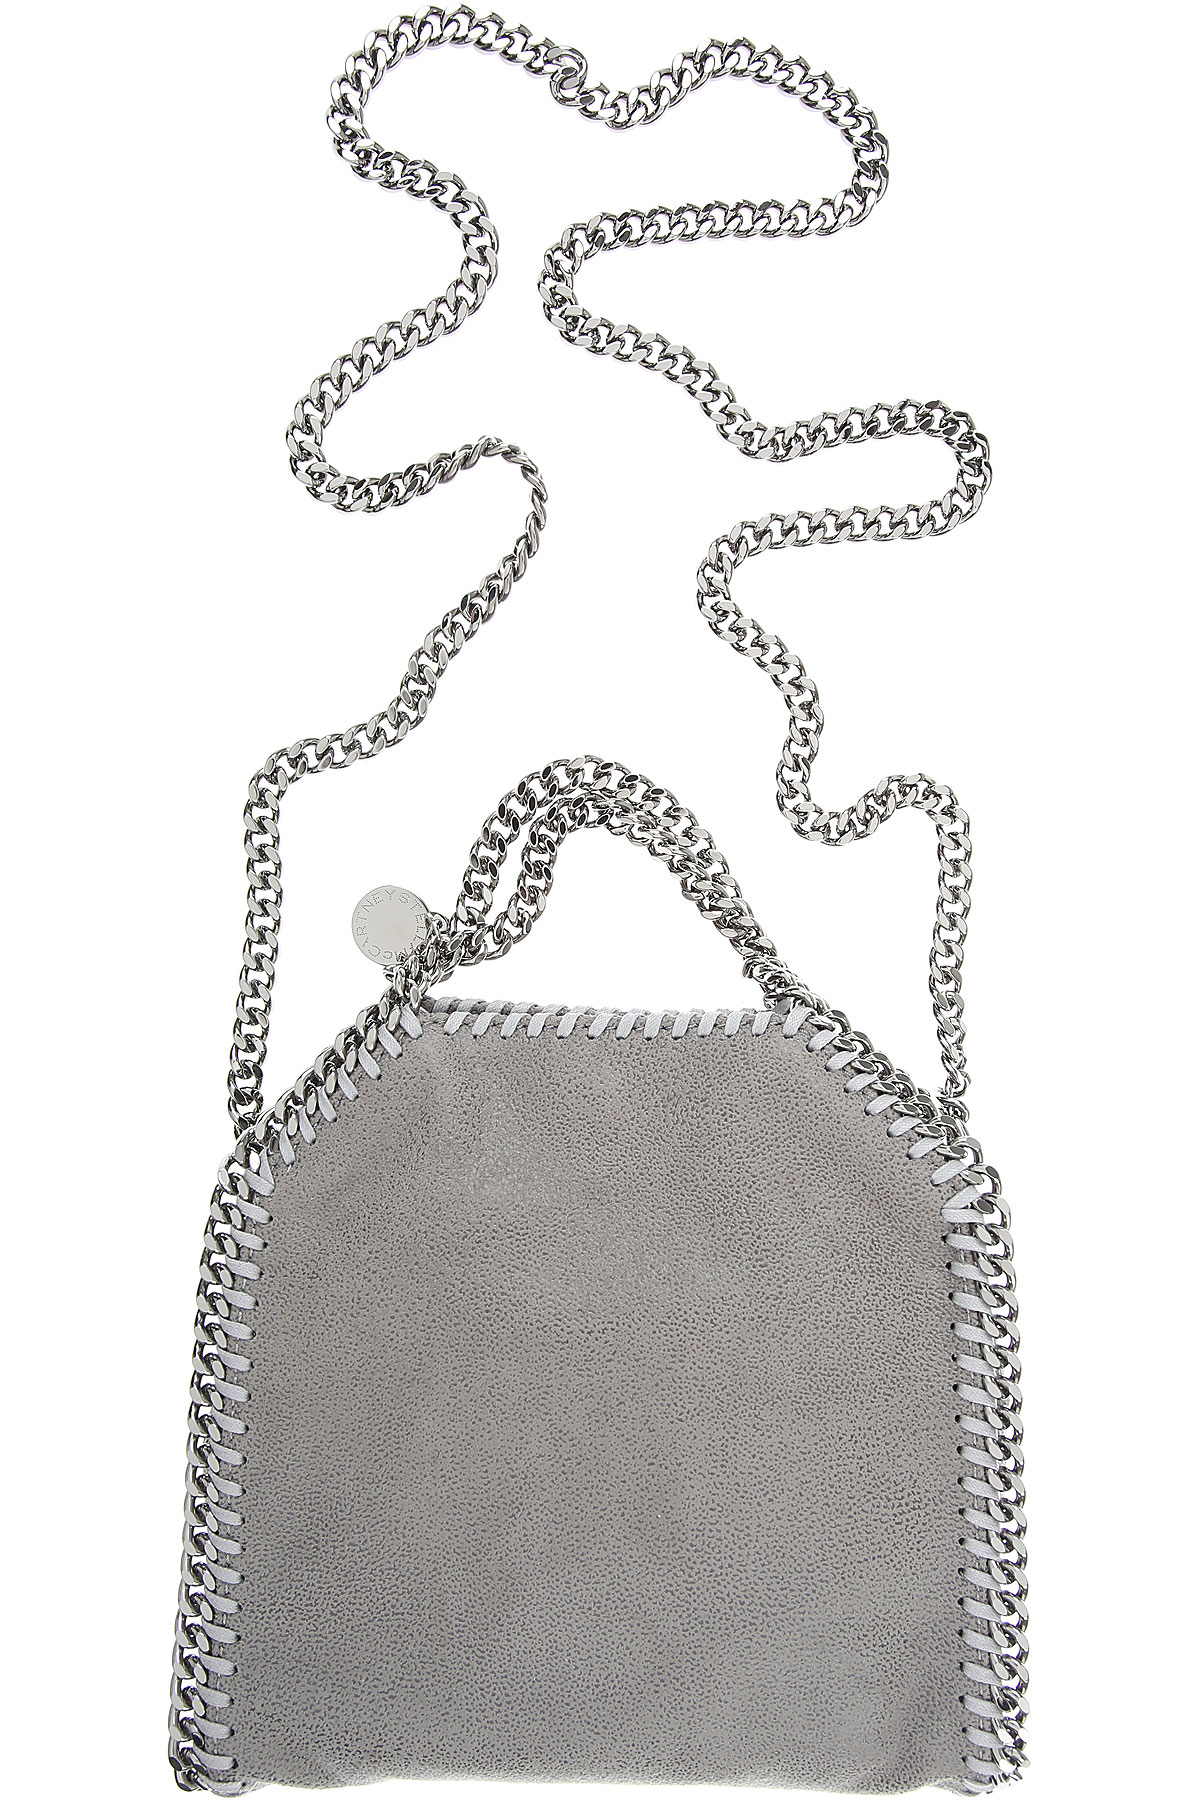 Handbags Stella McCartney, Style code: 391698-w9132-1220